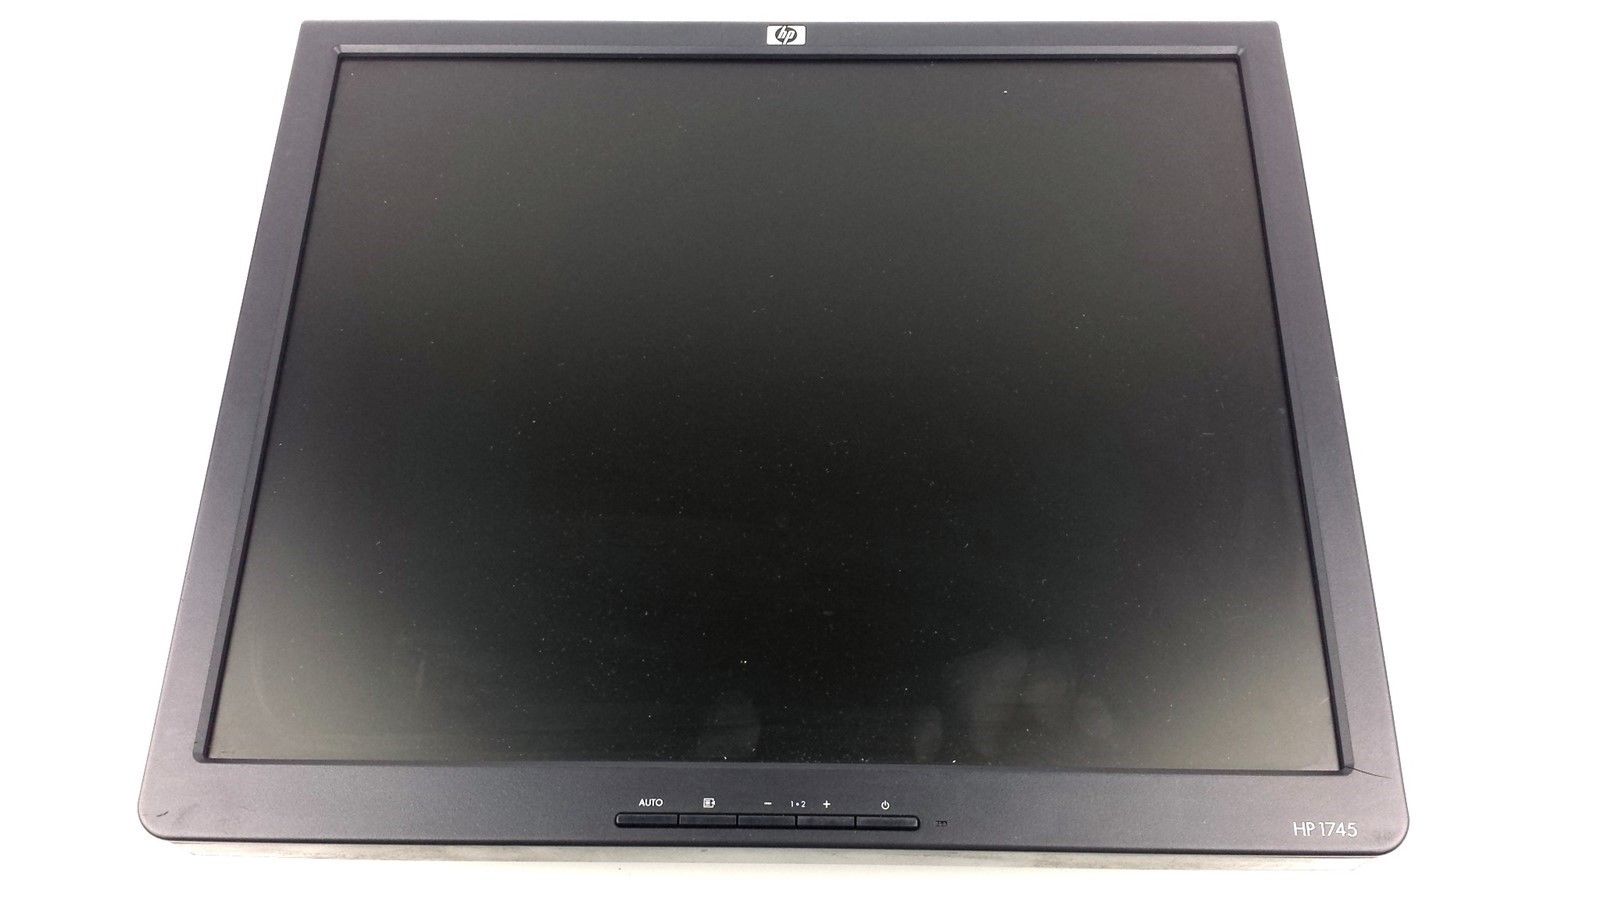 HP L1745 Flat Screen FHD LCD Computer Monitor 17" w/ Power and VGA Cord